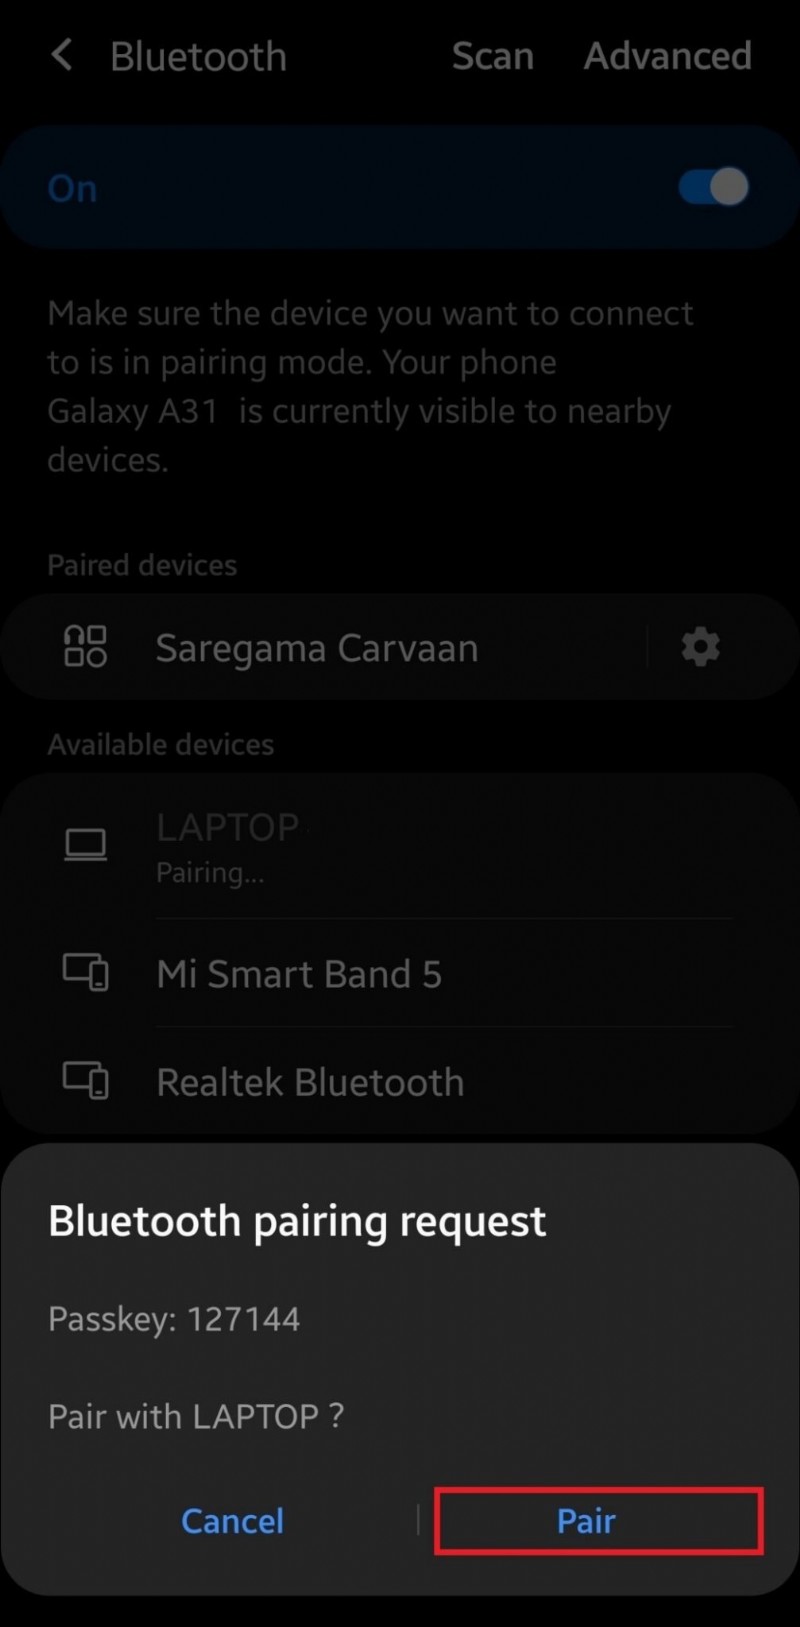 Windows 10에서 Bluetooth 장치의 이름을 바꾸는 방법 